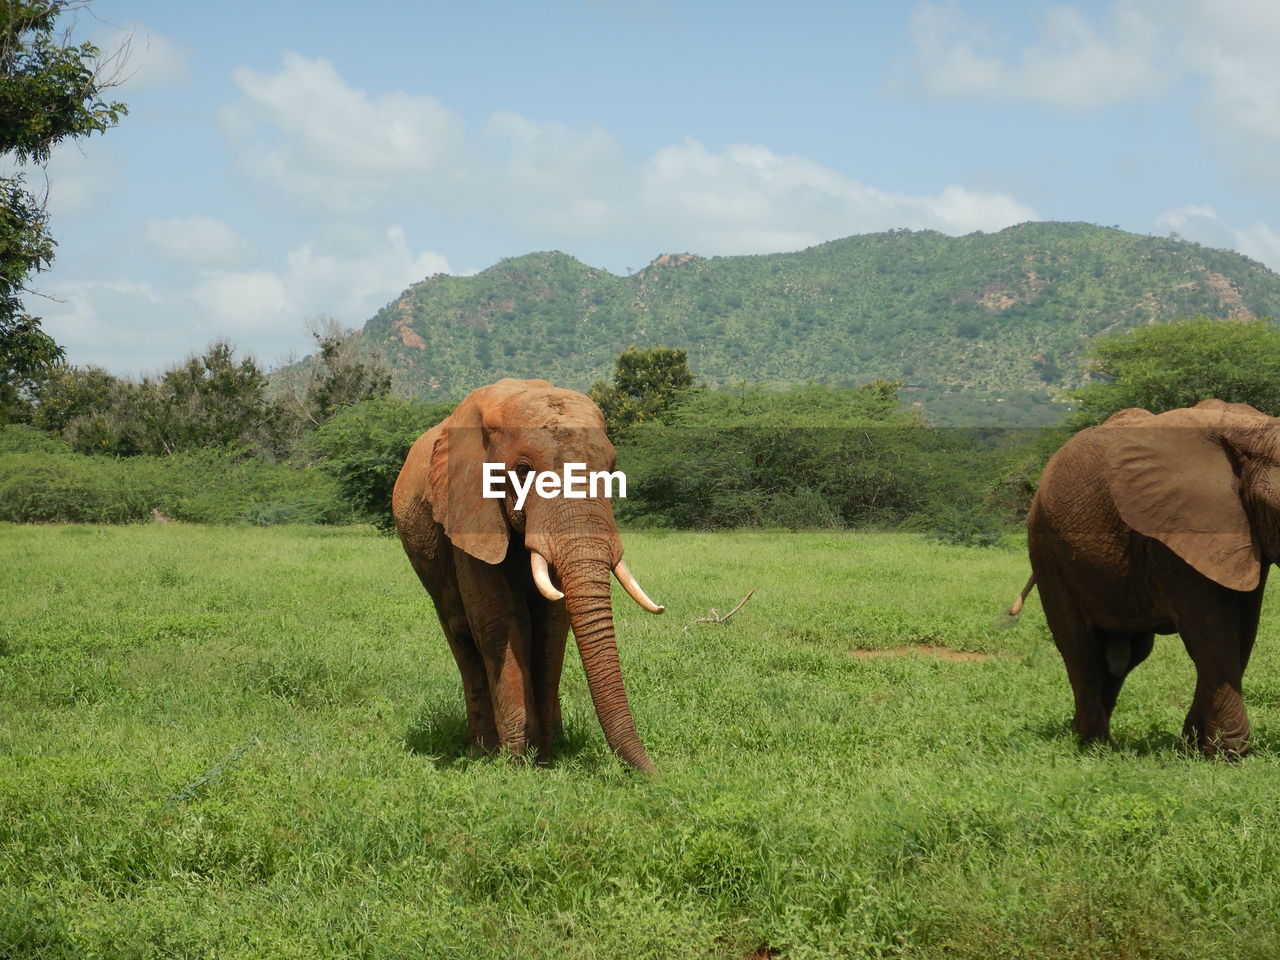 ELEPHANT STANDING ON FIELD